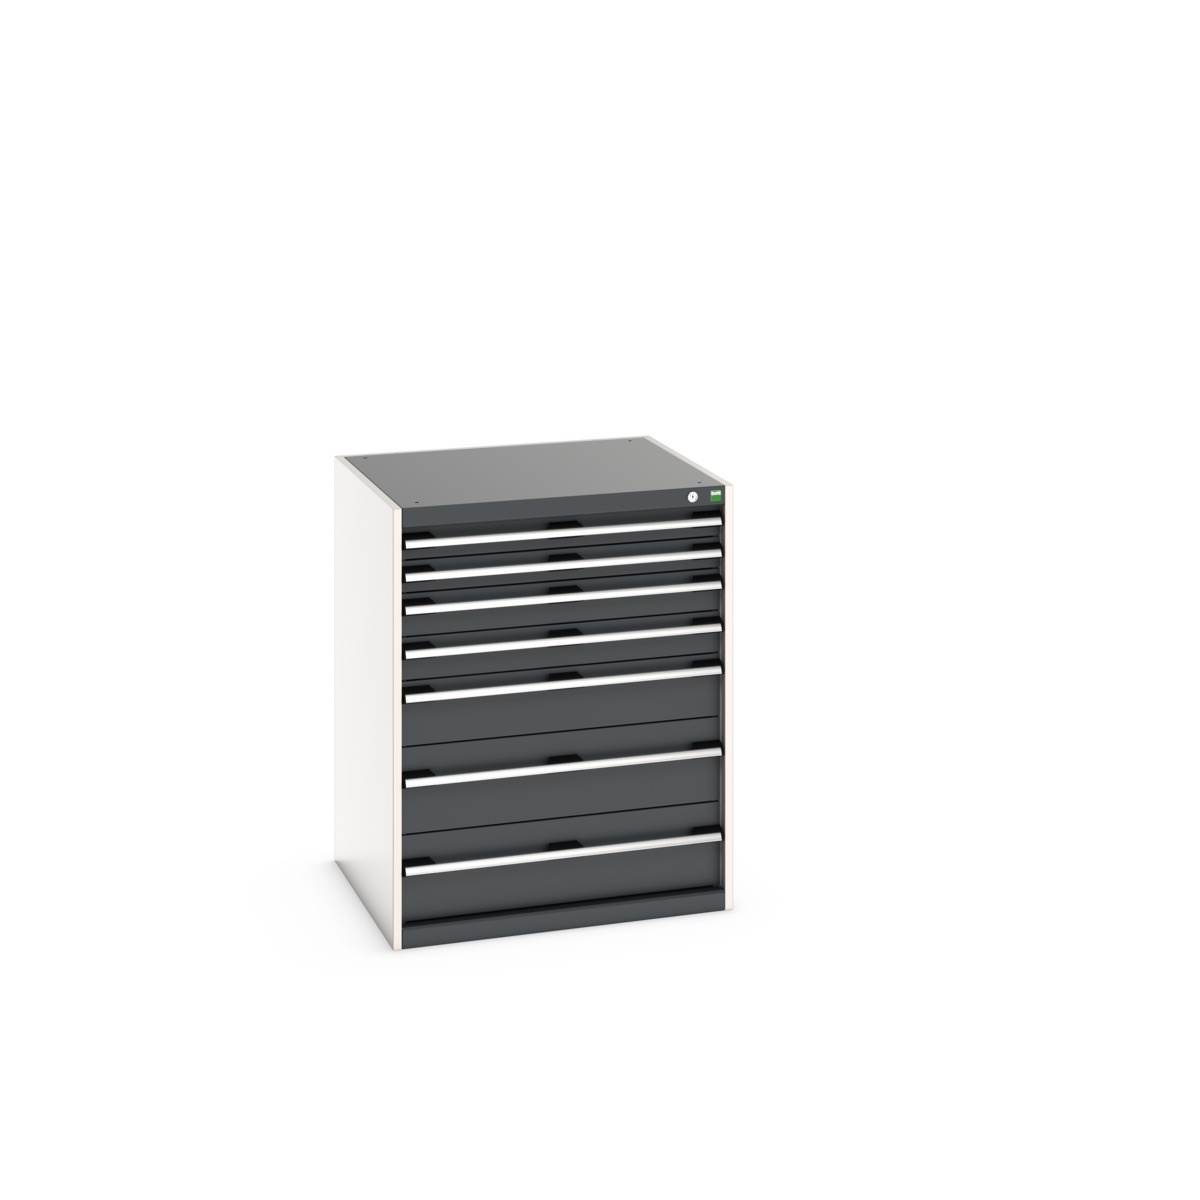 40028024. - cubio drawer cabinet 